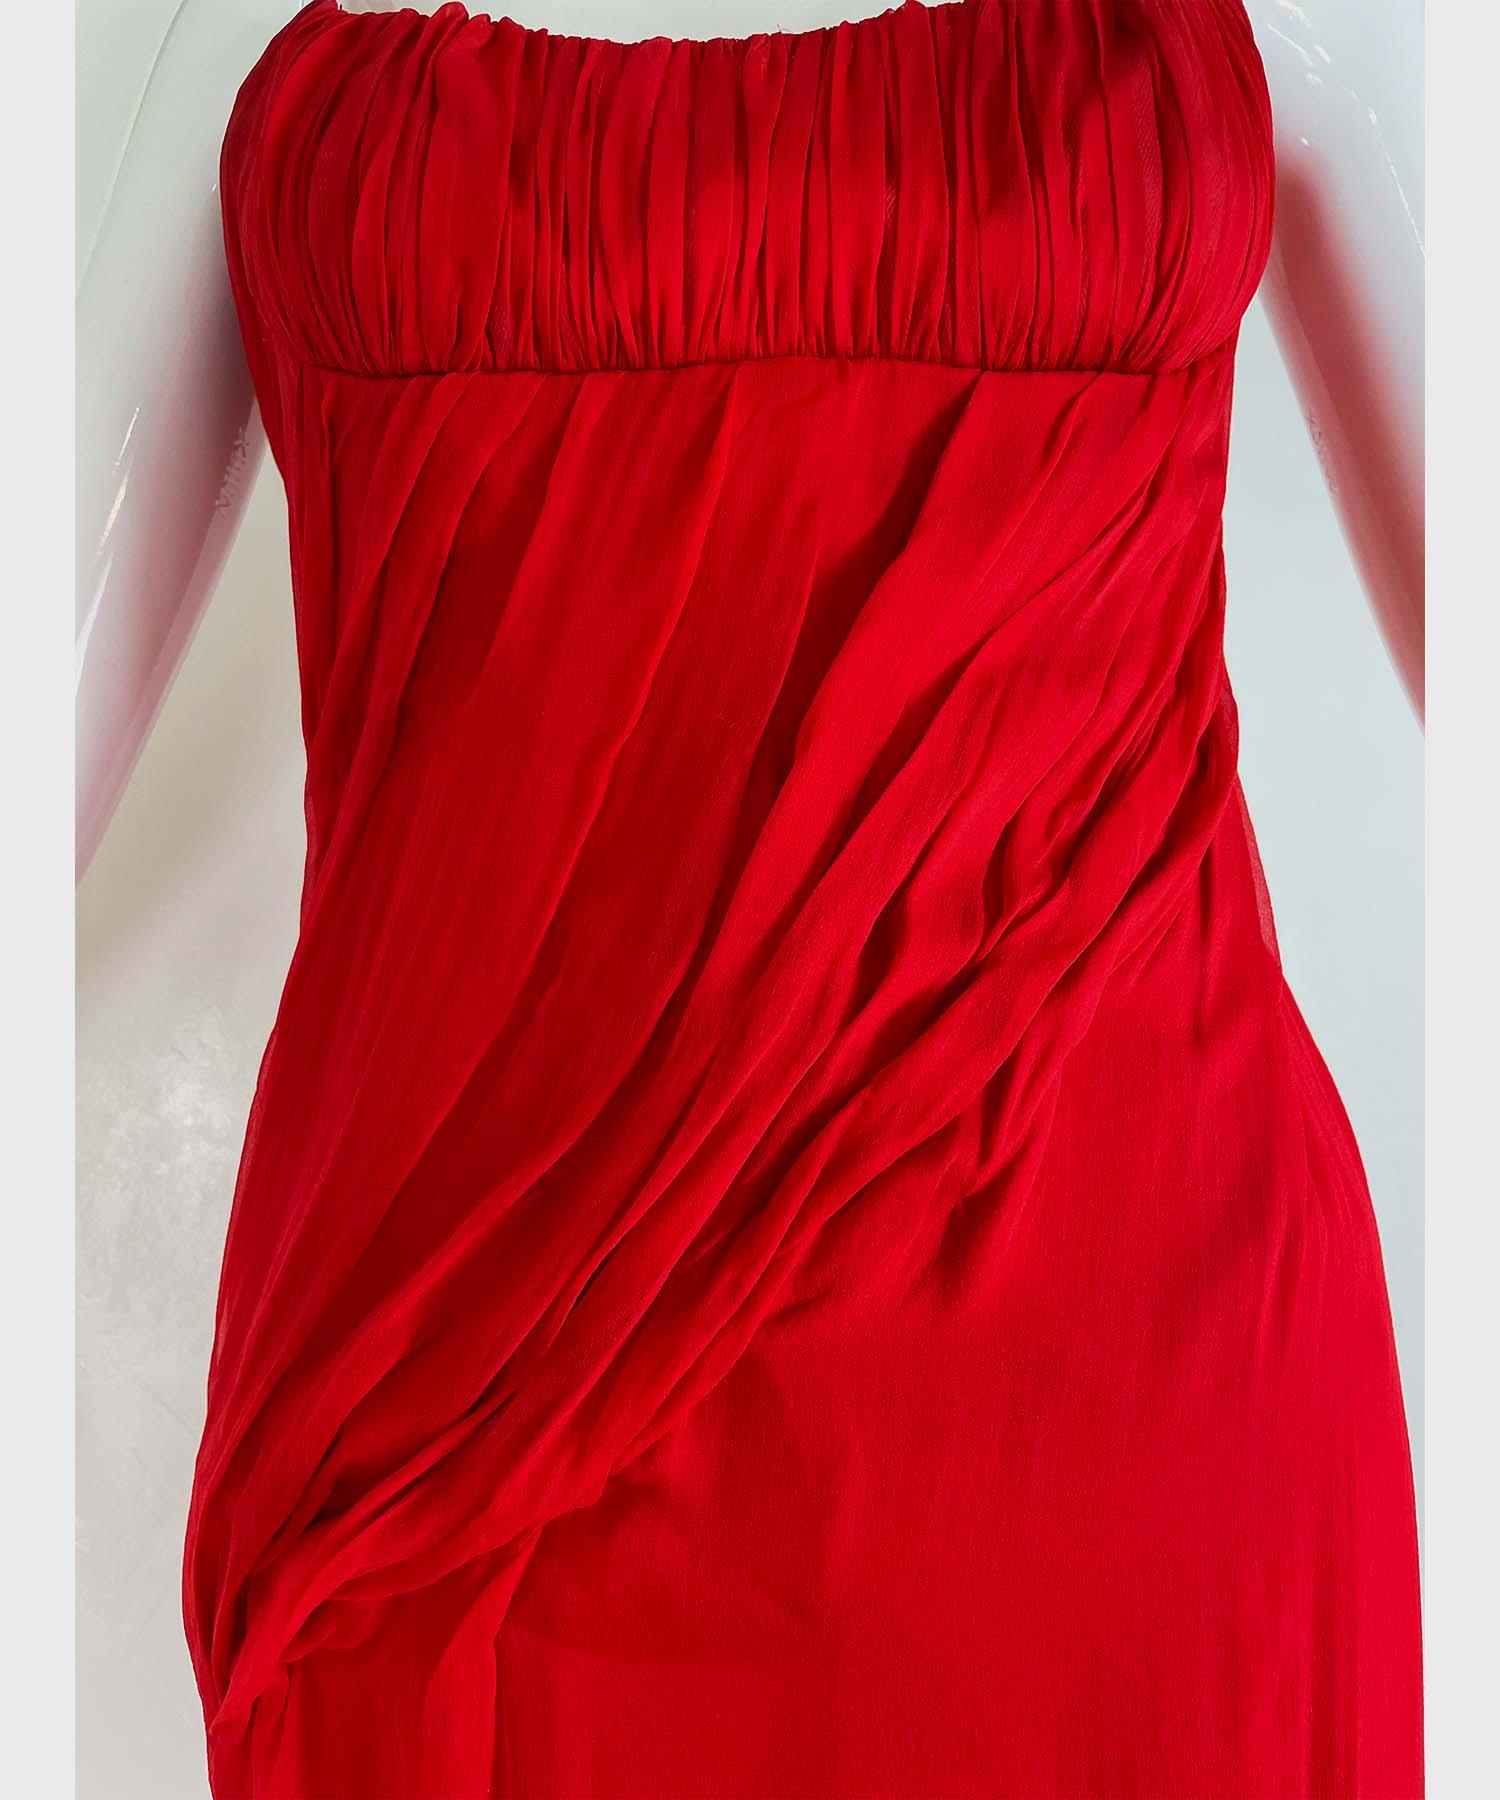 Atelier Versace Red Silk Chiffon Gown Patron Original For Sale 8